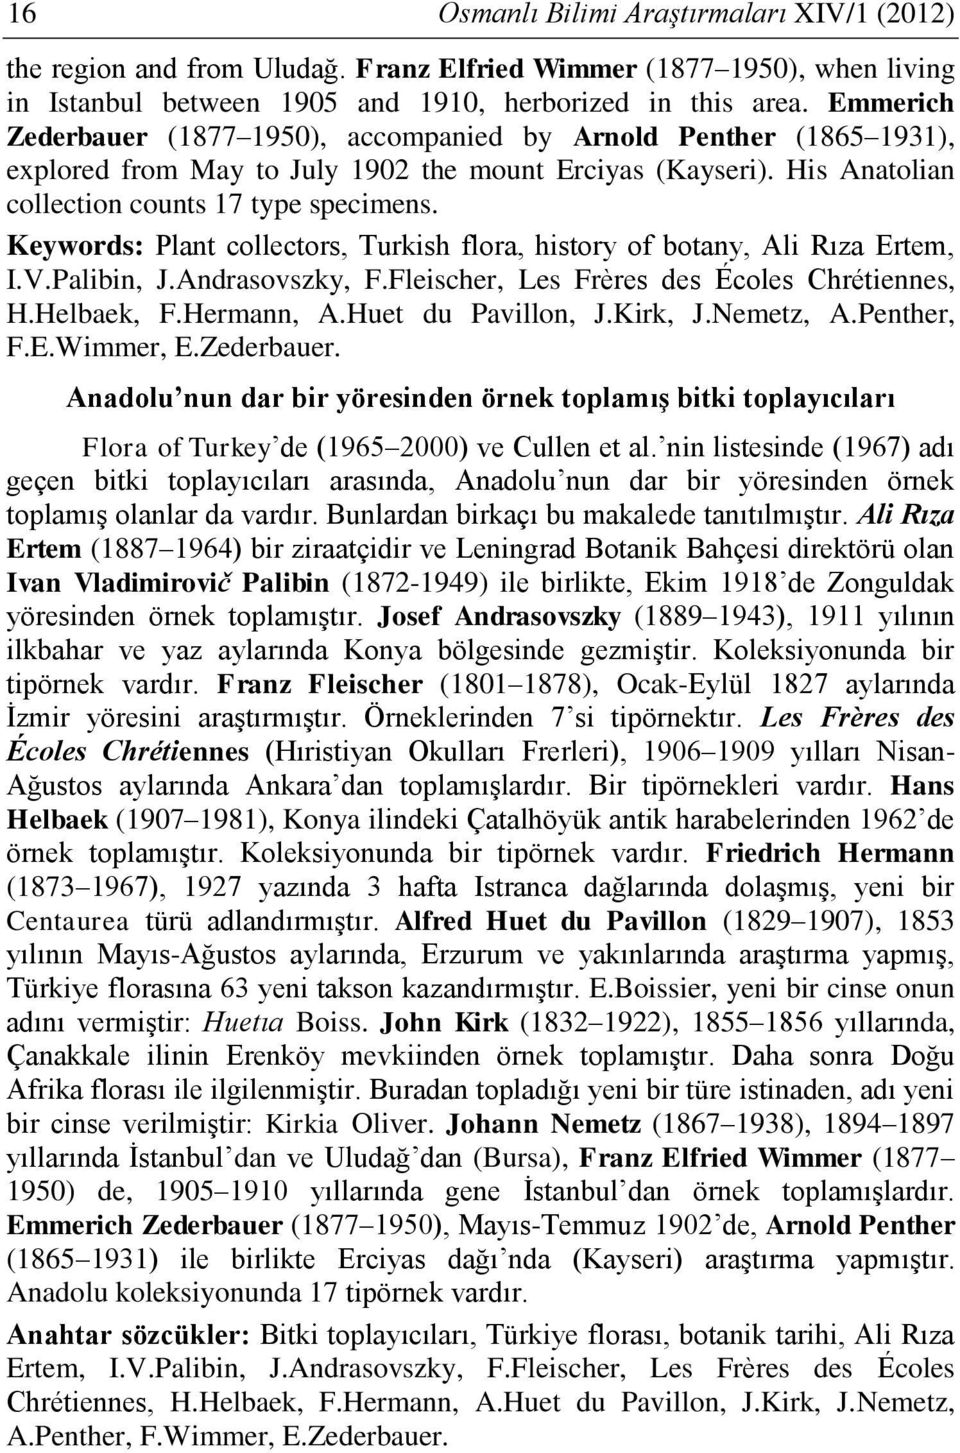 Keywords: Plant collectors, Turkish flora, history of botany, Ali Rıza Ertem, I.V.Palibin, J.Andrasovszky, F.Fleischer, Les Frères des Écoles Chrétiennes, H.Helbaek, F.Hermann, A.Huet du Pavillon, J.